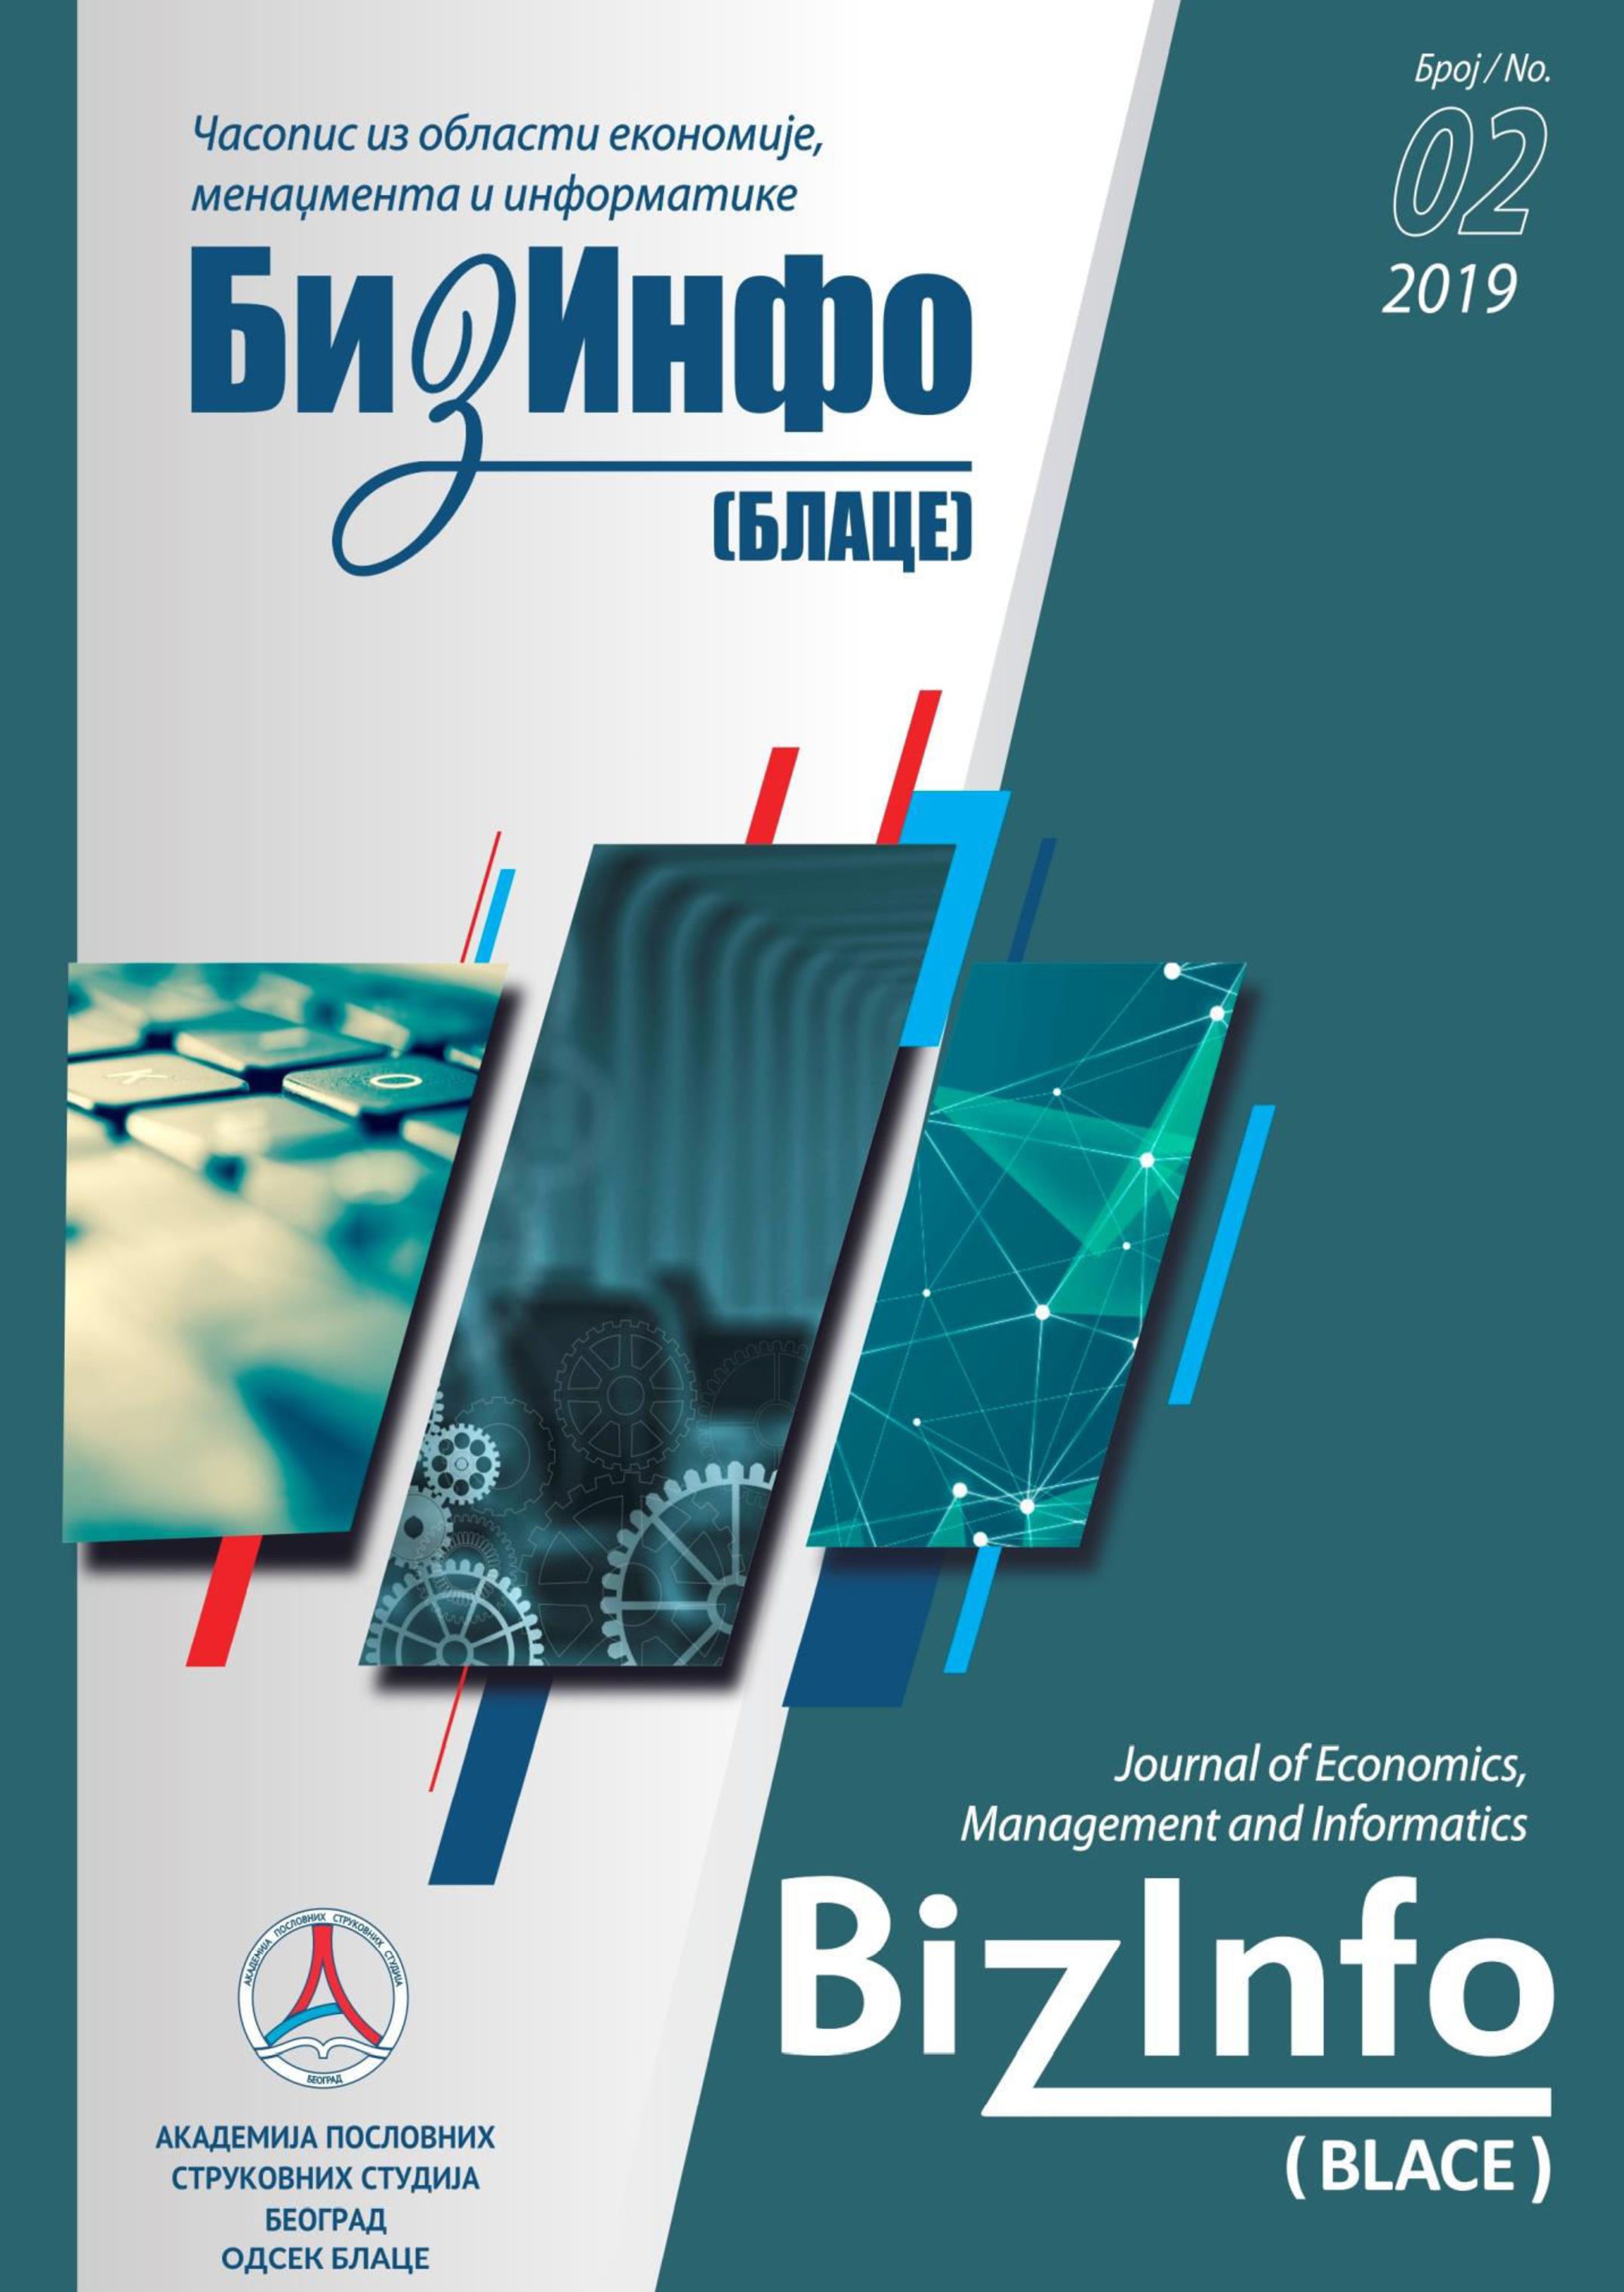 					View Vol. 10 No. 2 (2019): BizInfo (Blace) Journal of Economics, Management and Informatics
				